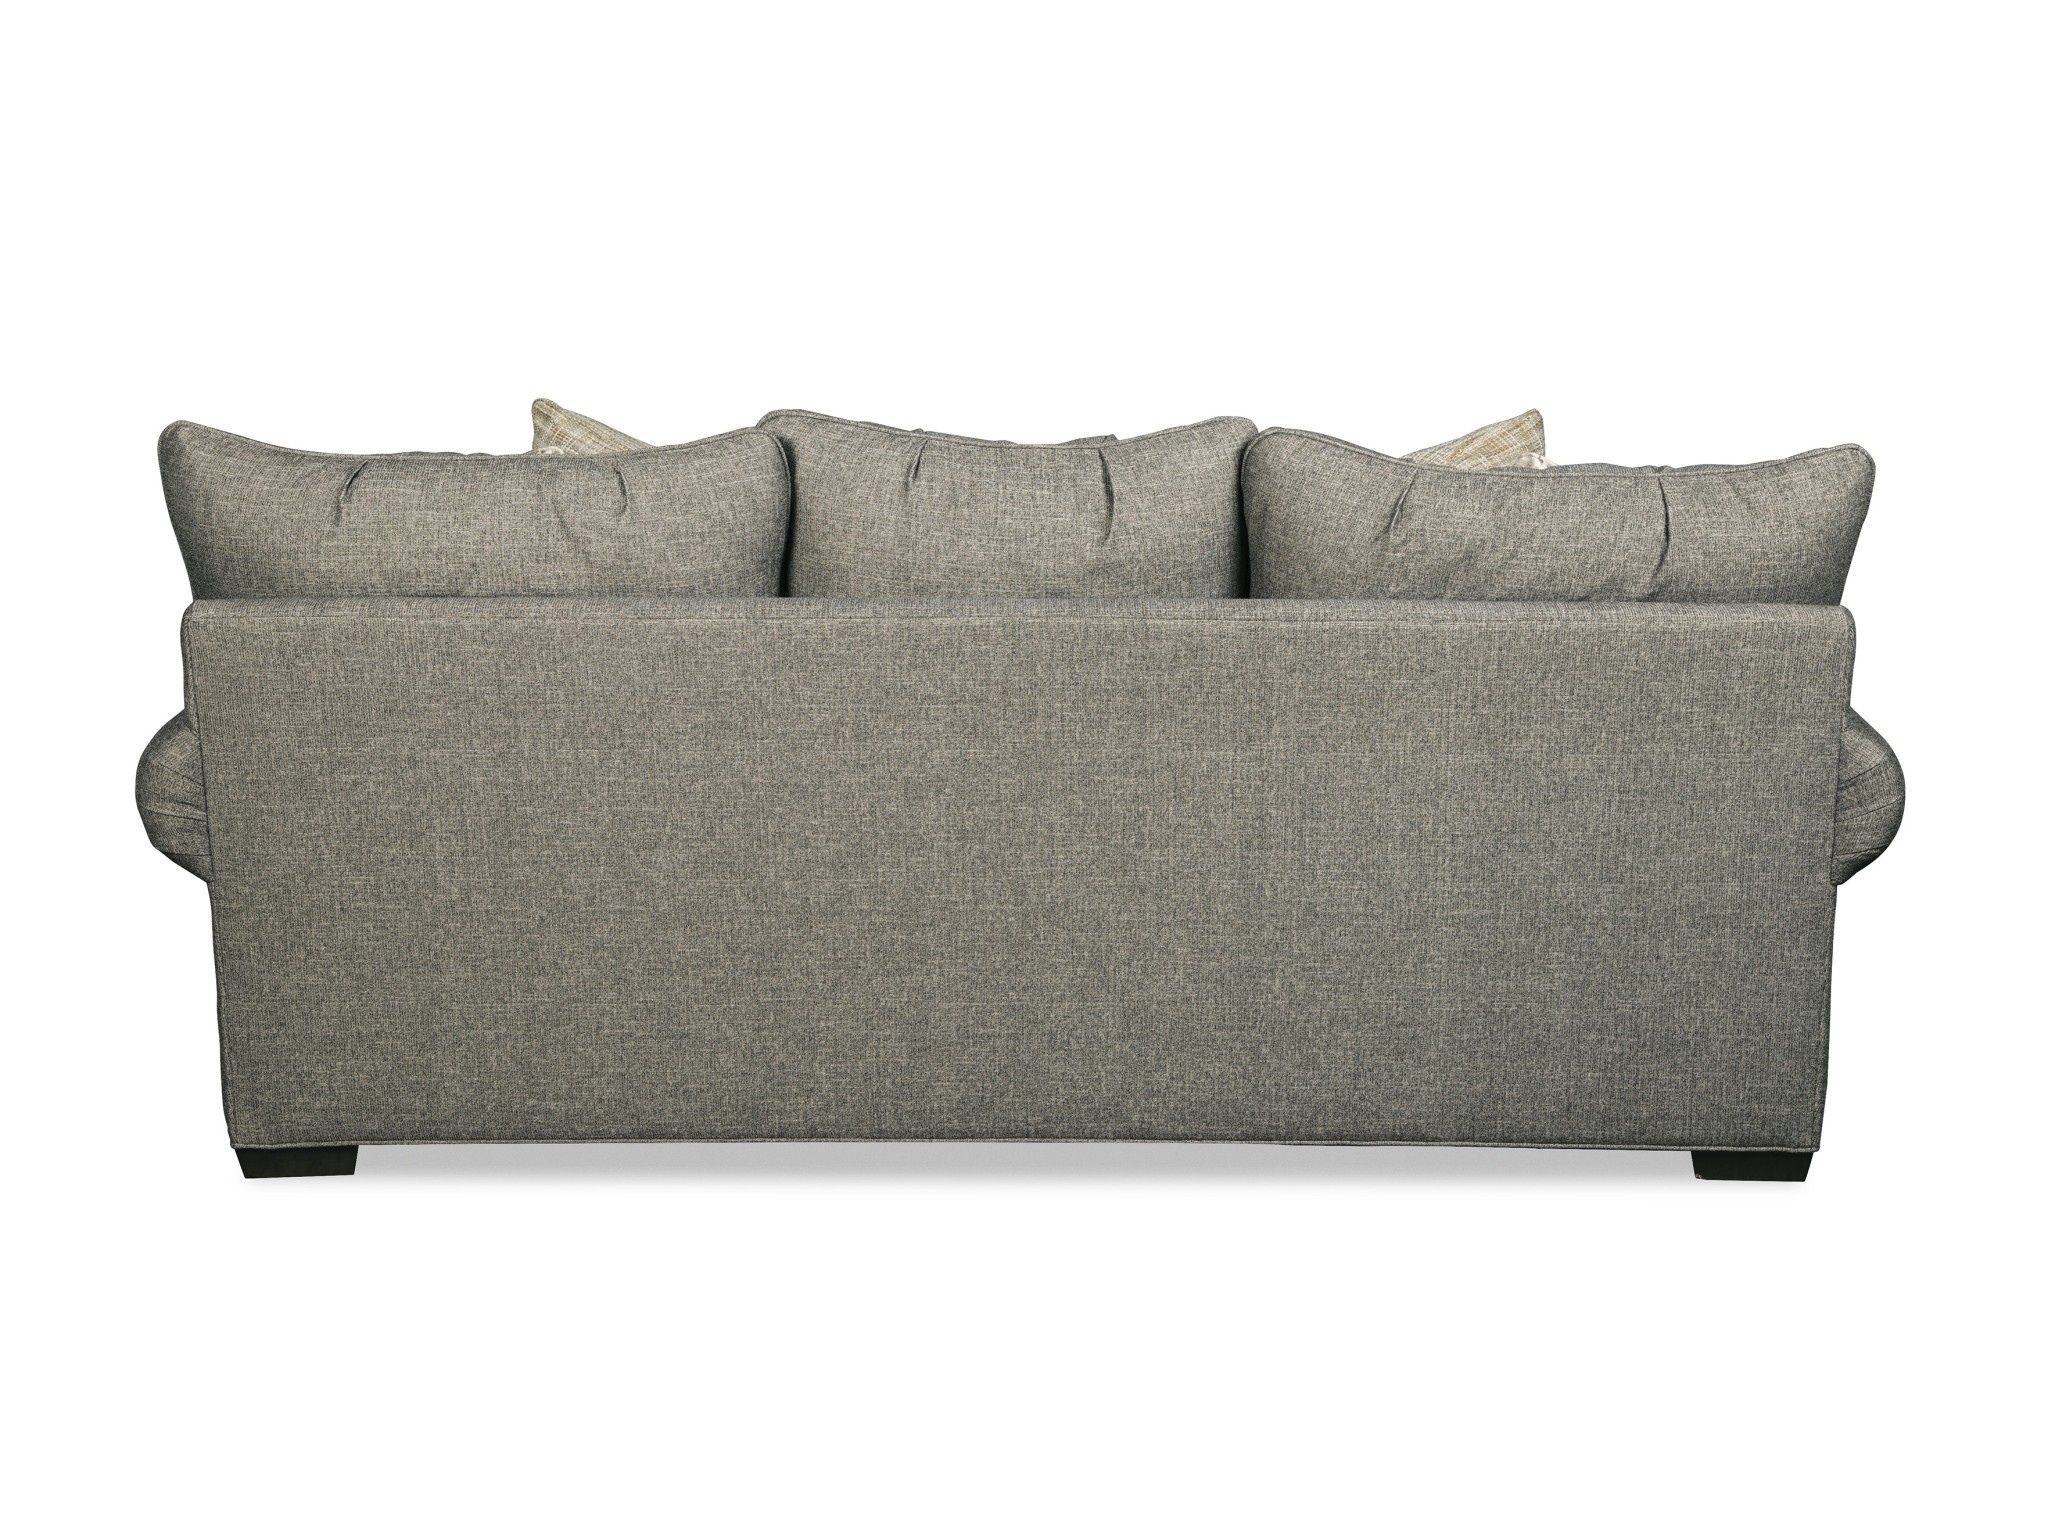 Craftmaster Furniture 7016 Sofa